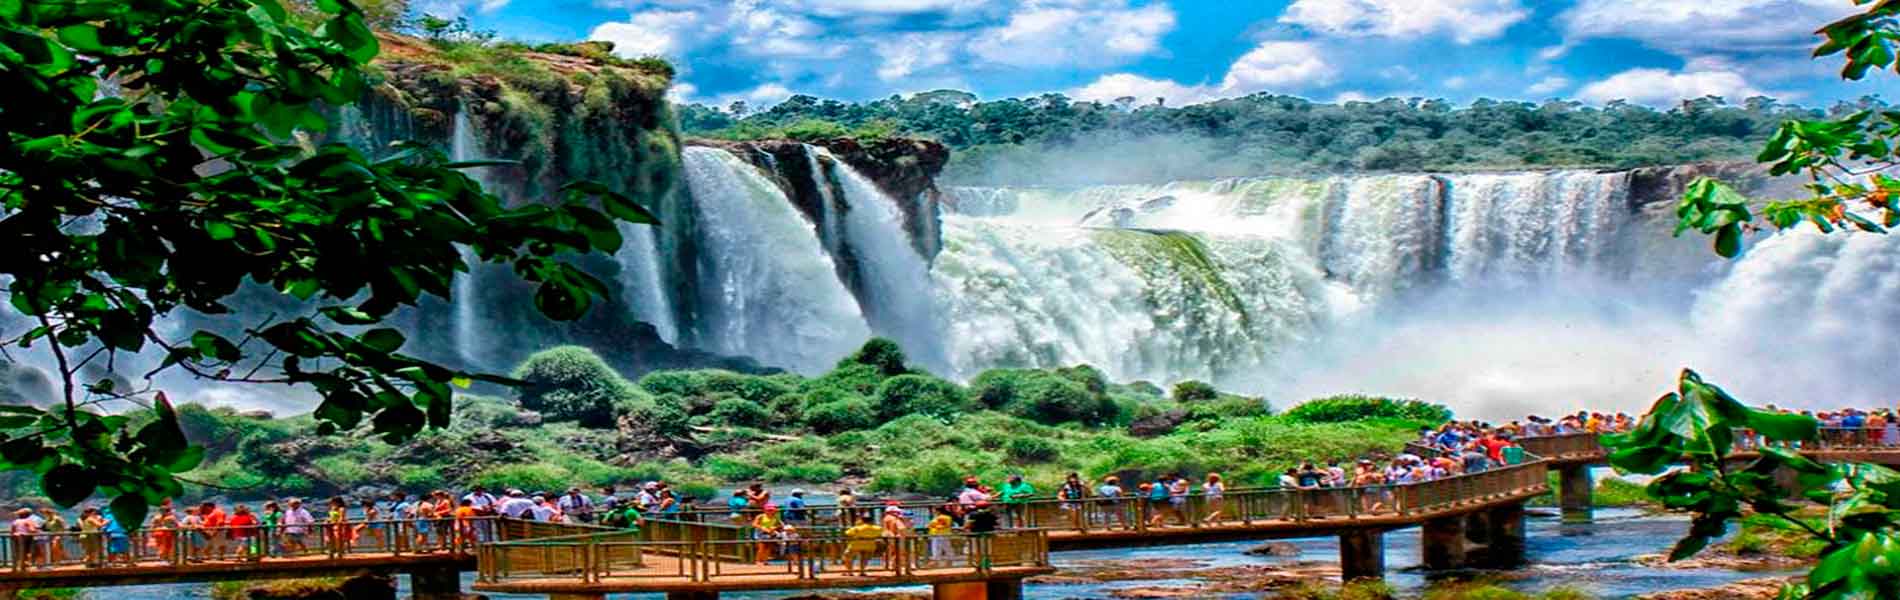 Iguazu falls Travel